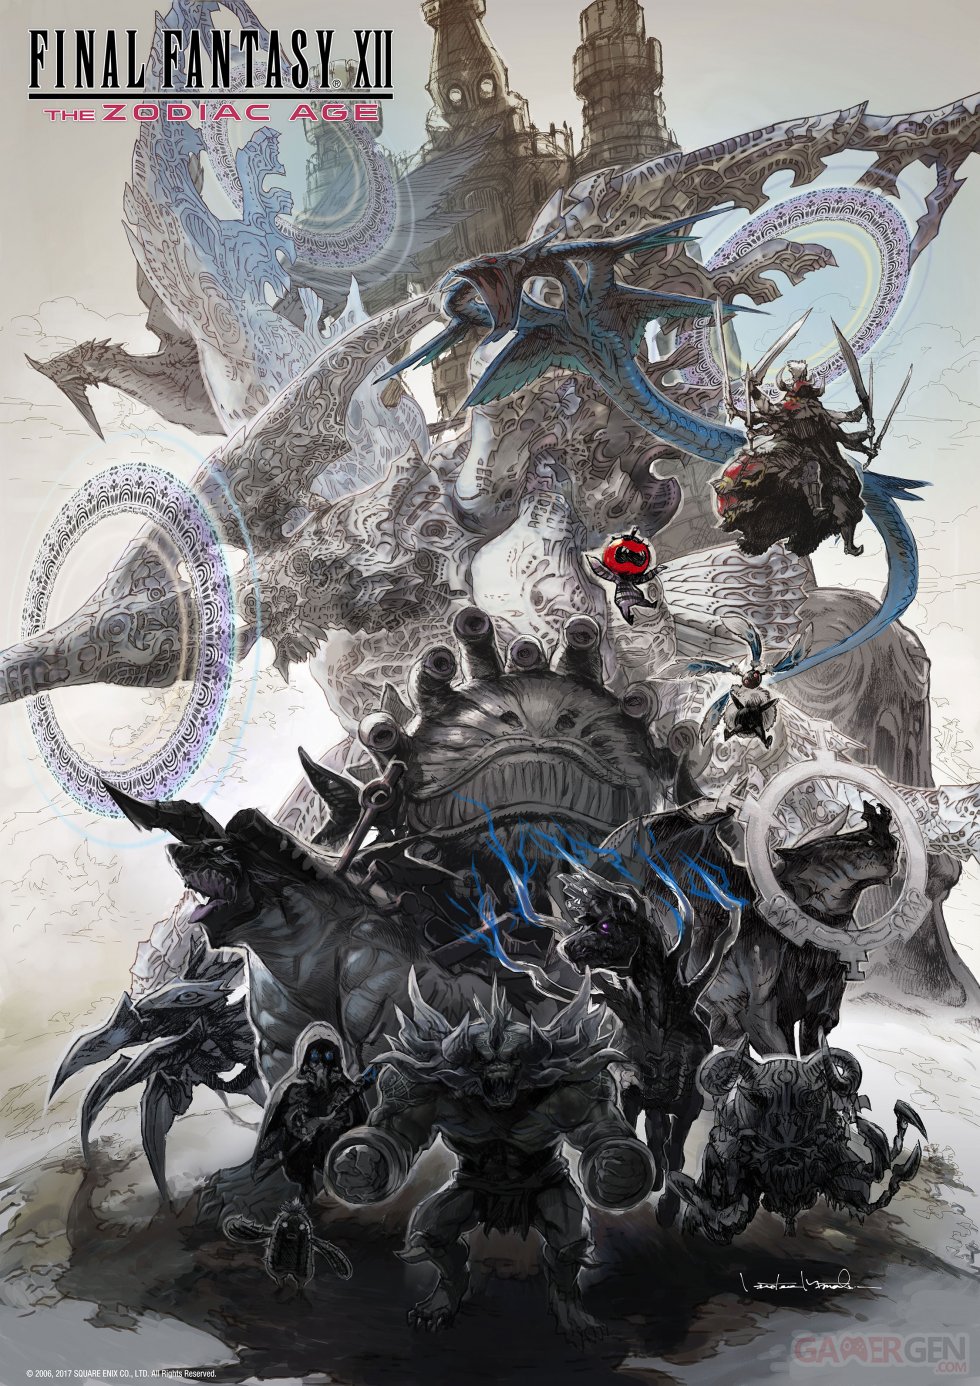 Final-Fantasy-XII-The-Zodiac-Age_collector's-edition-steelbook-artwork